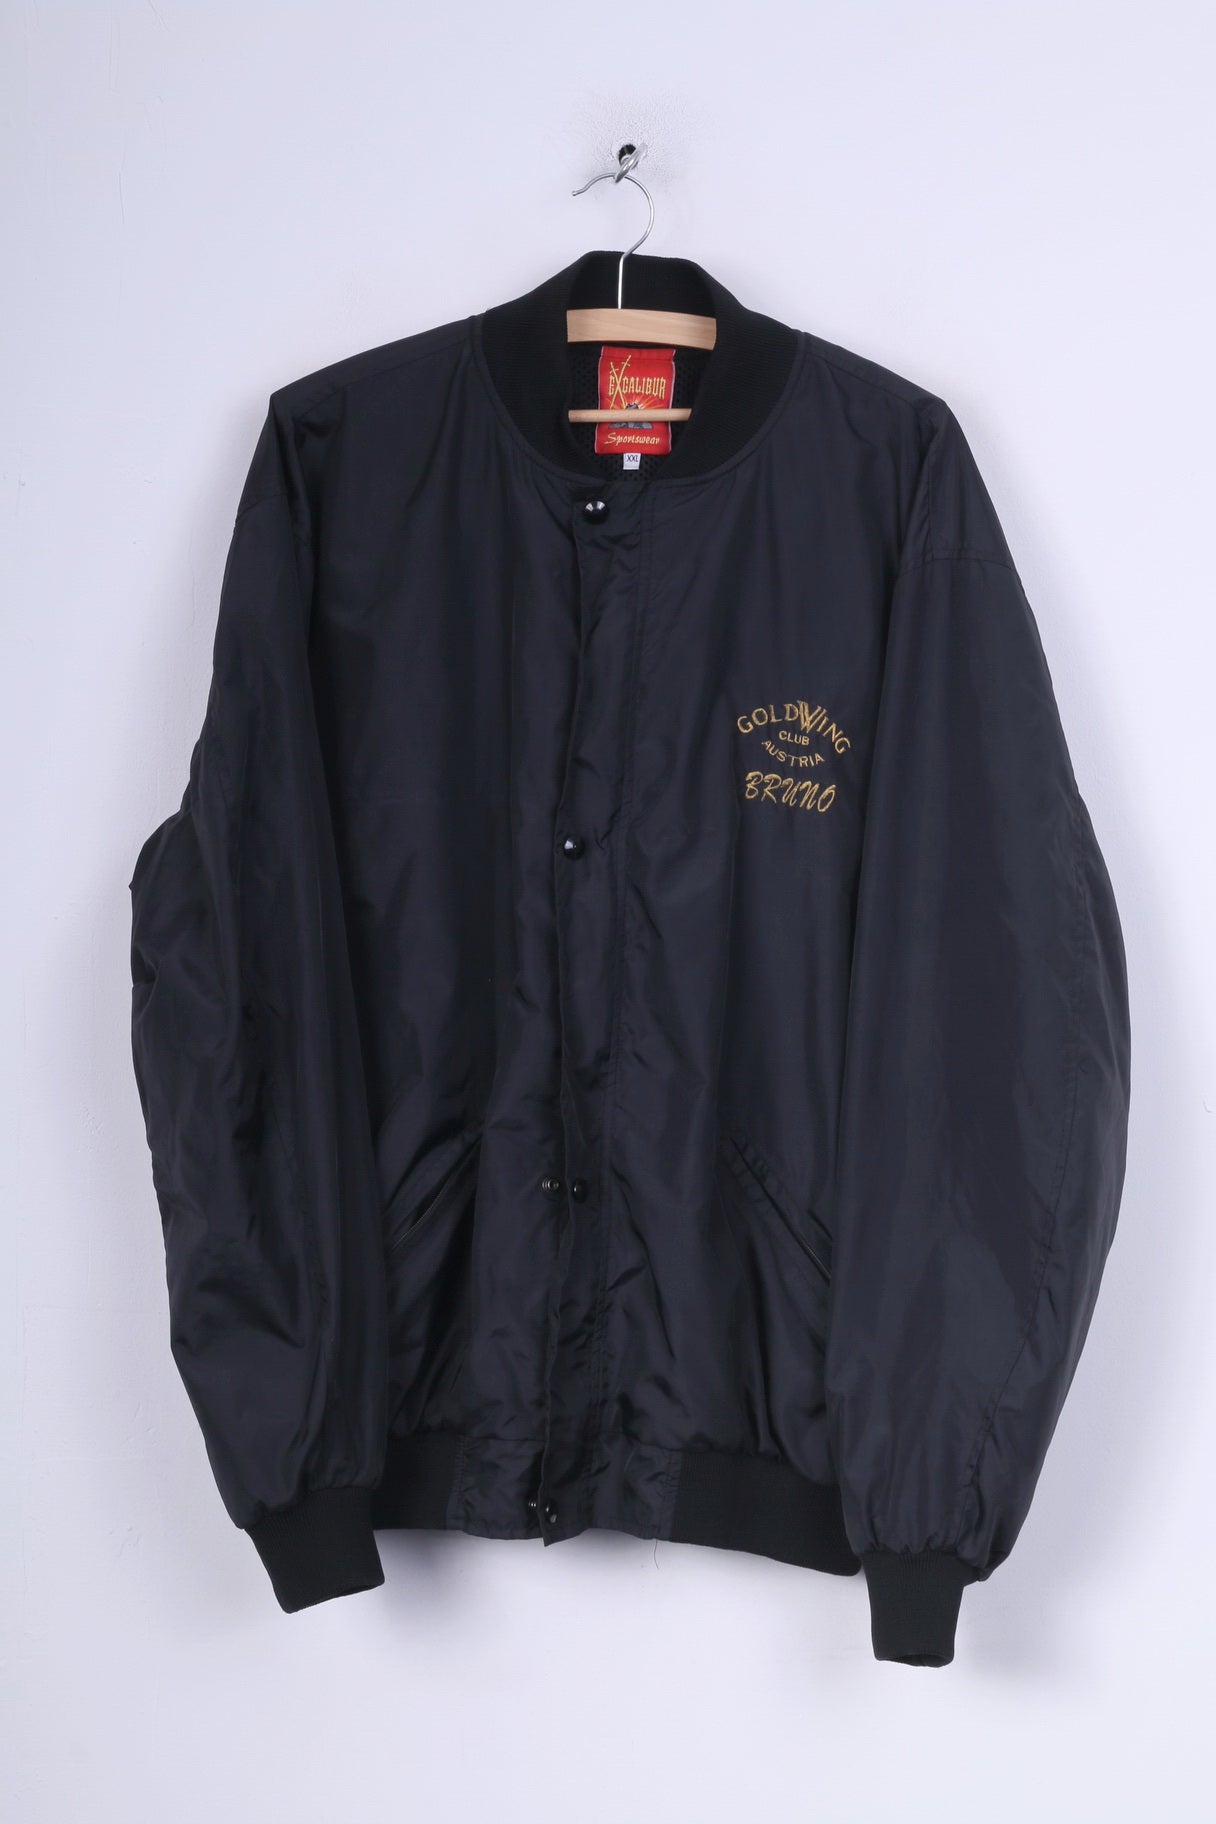 Excalibur Goldwing Club Austria Mens 2XL Bomber Jacket Black Full Zipper Sportswear Region Ost Vintage